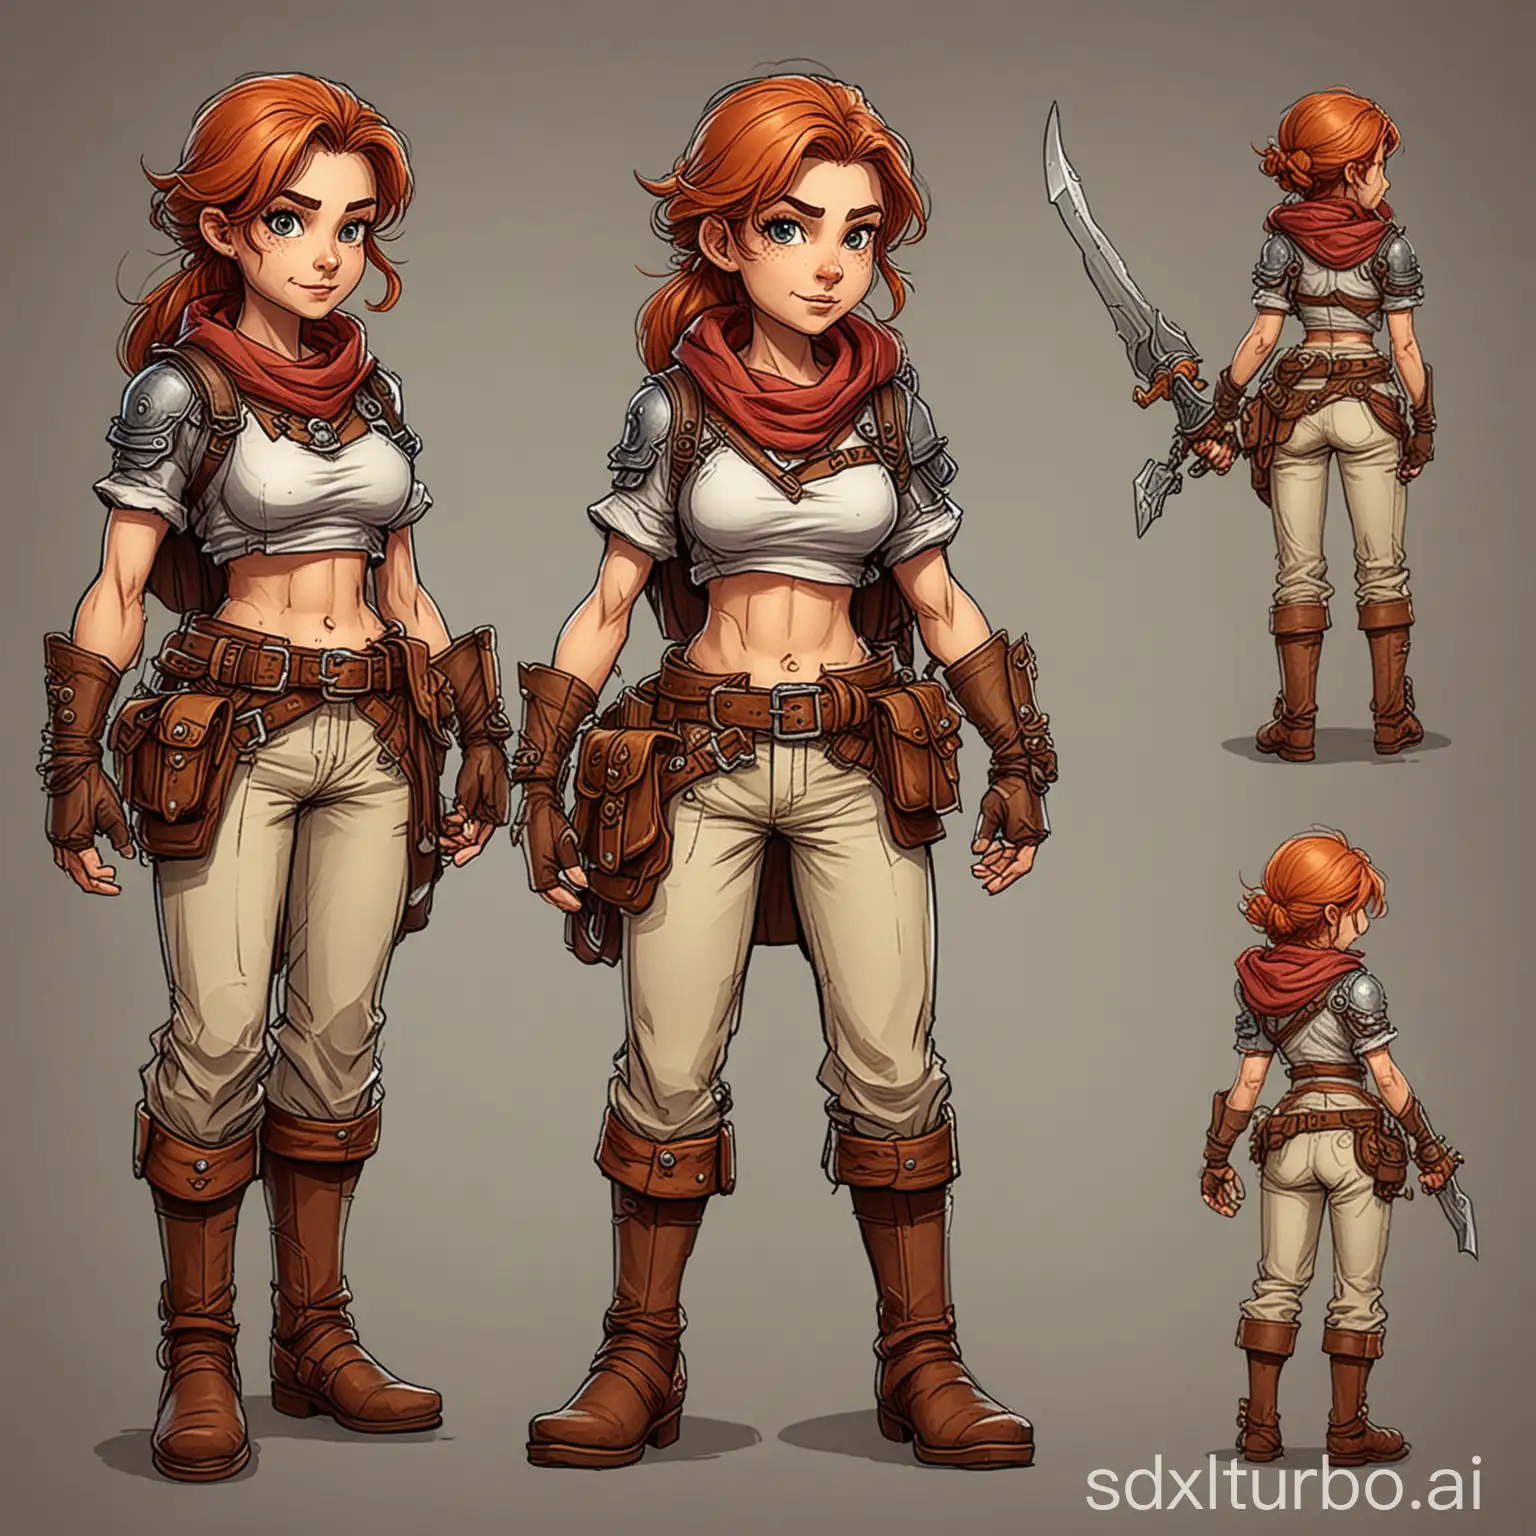 HandDrawn-Cartoon-RPG-Adventurer-Female-Character